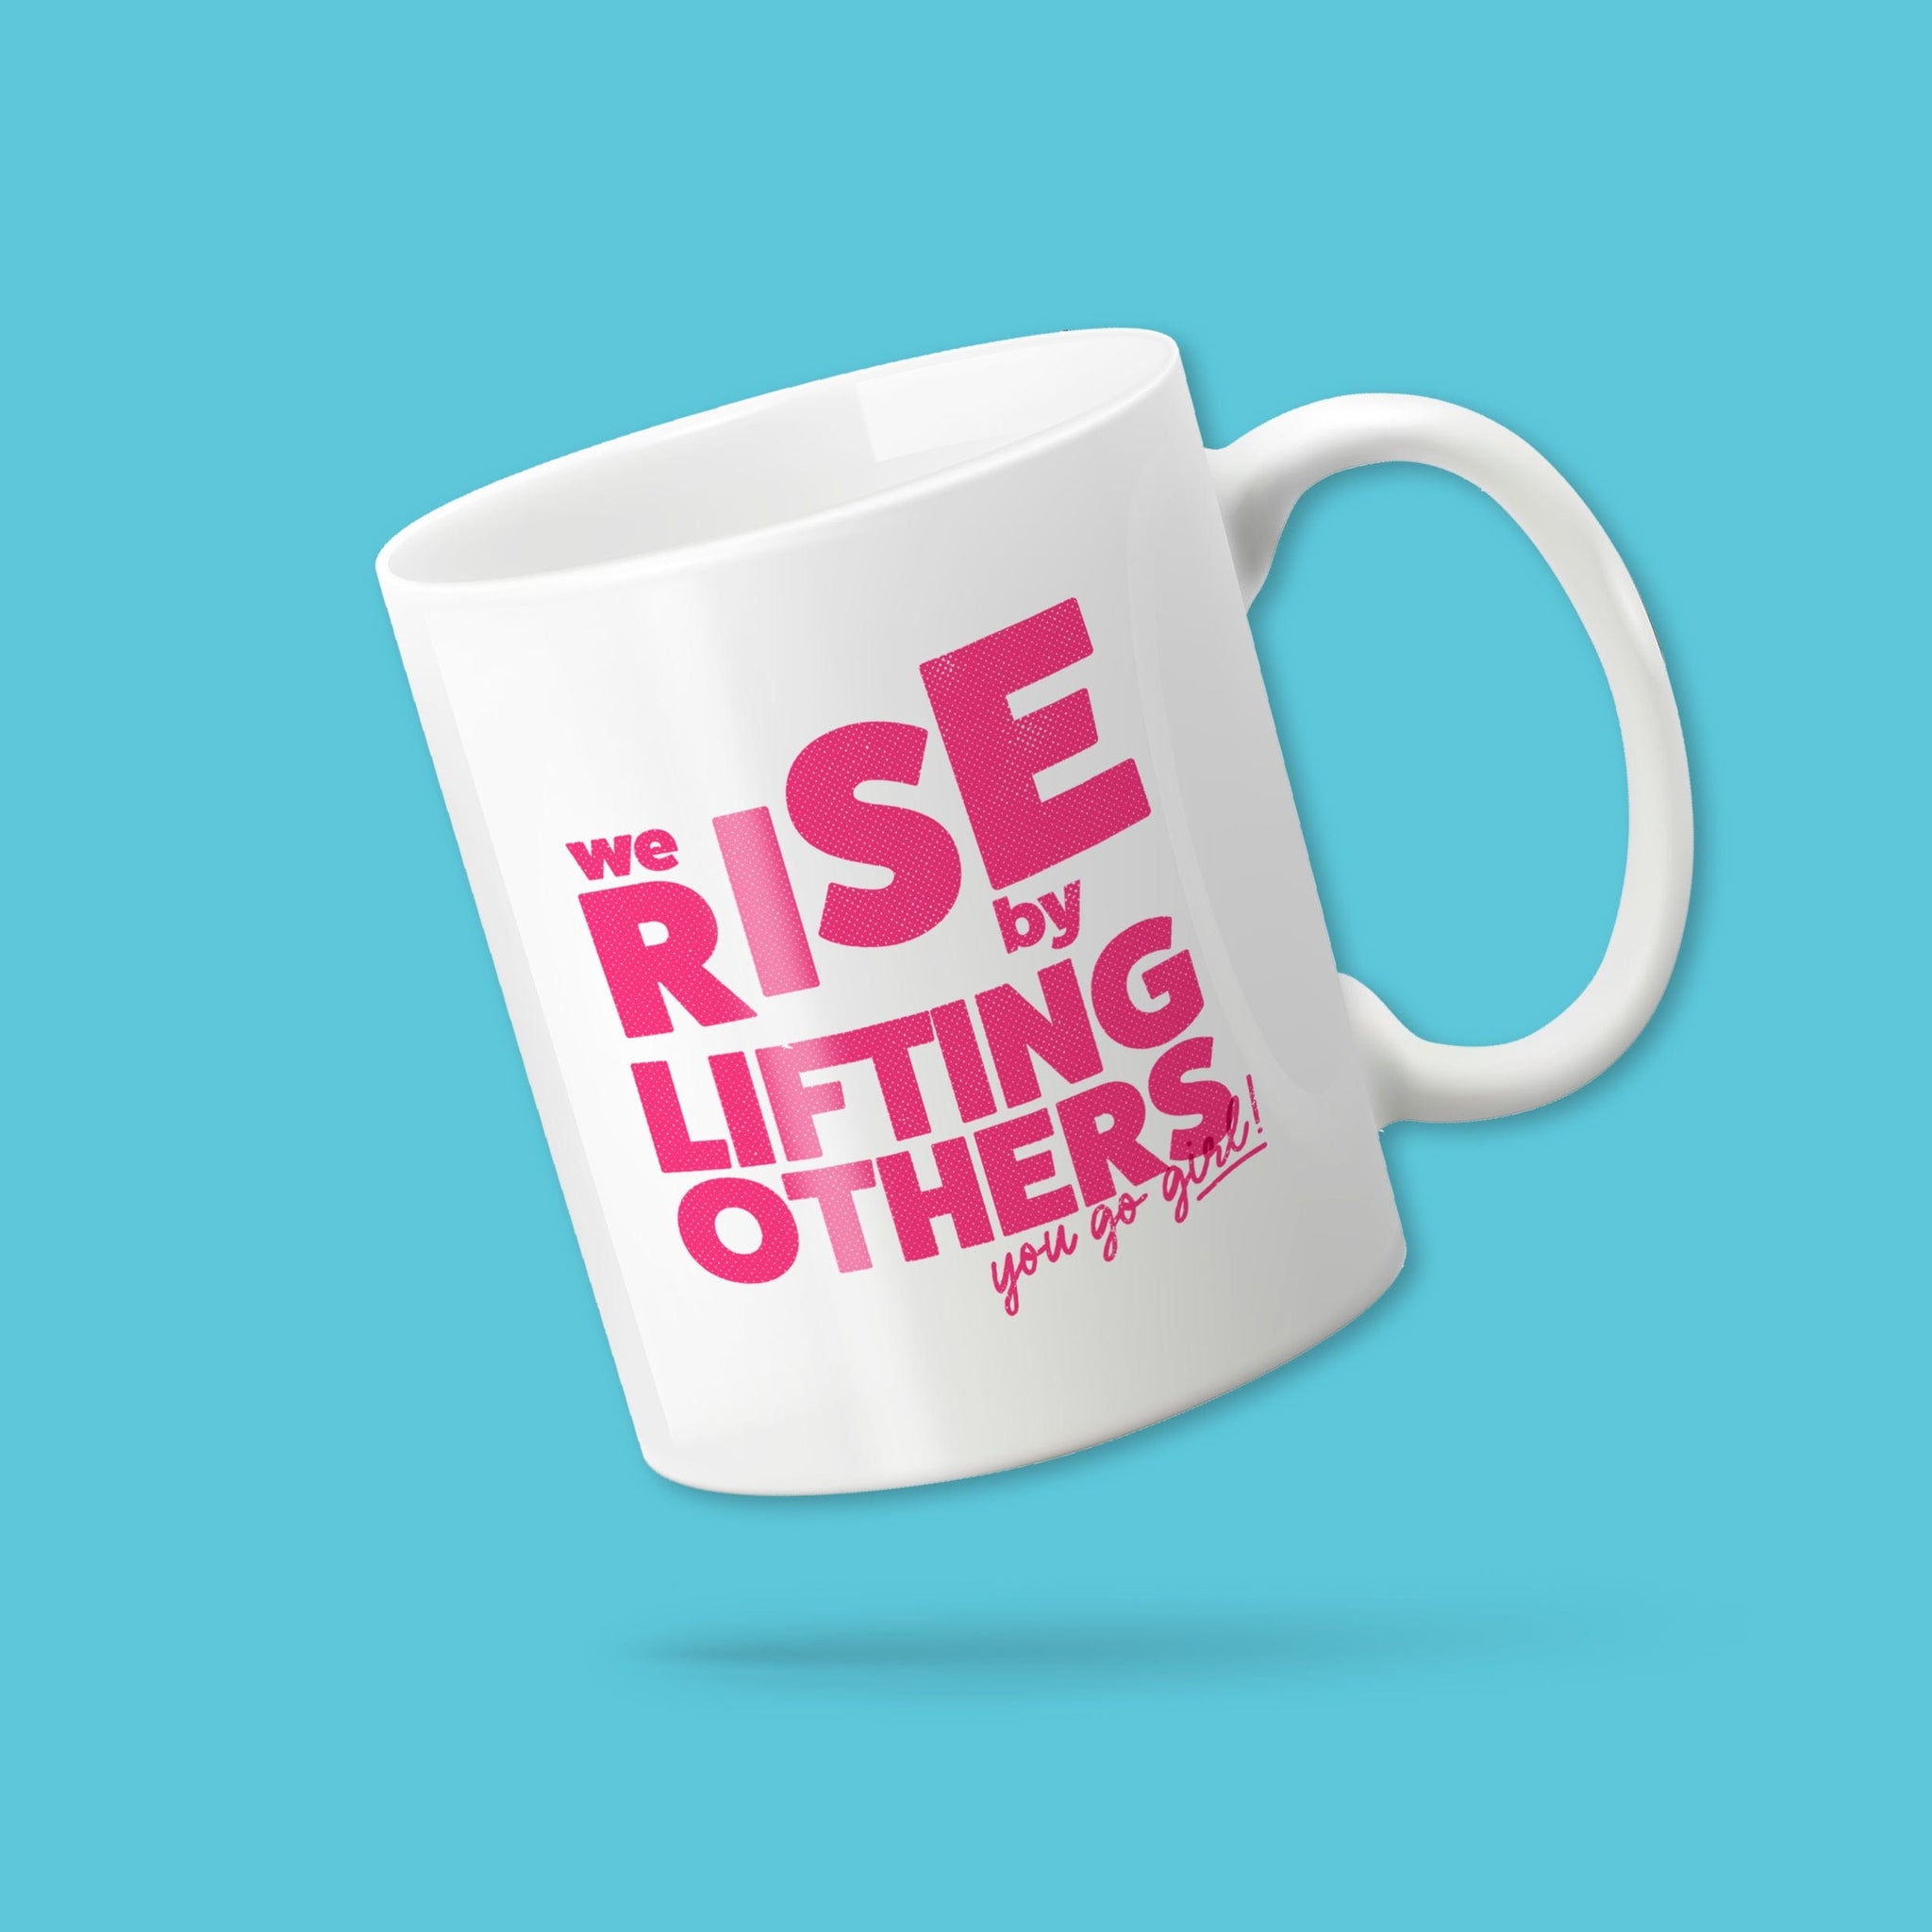 We Rise By Lifting Others mug